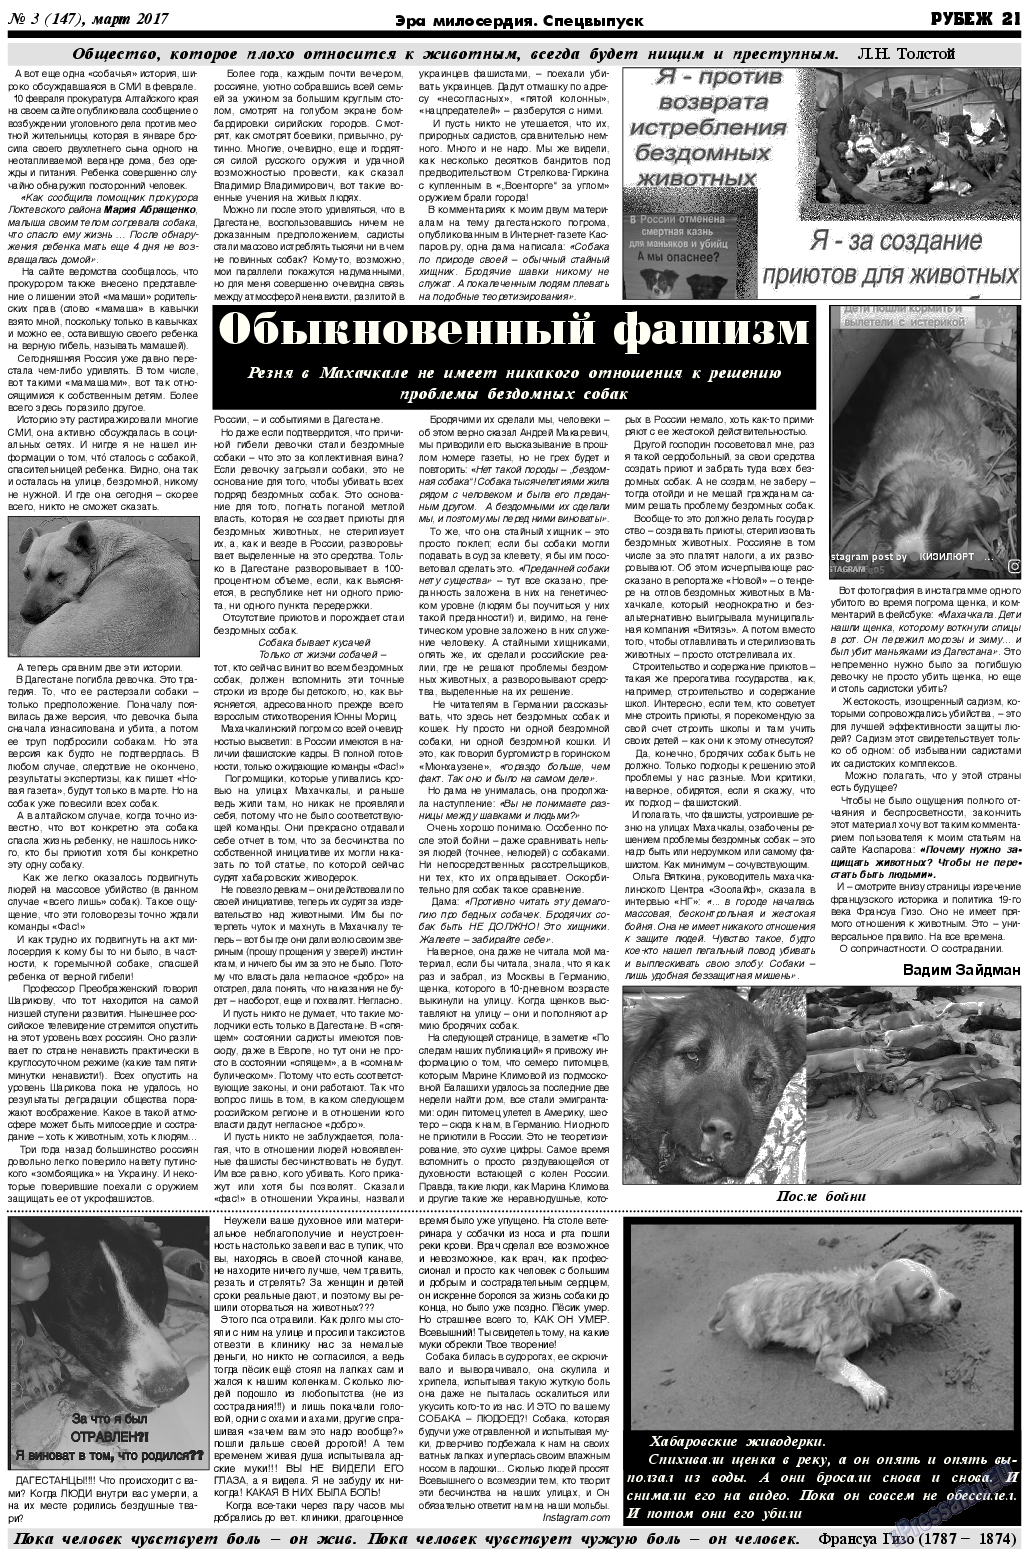 Рубеж, газета. 2017 №3 стр.21